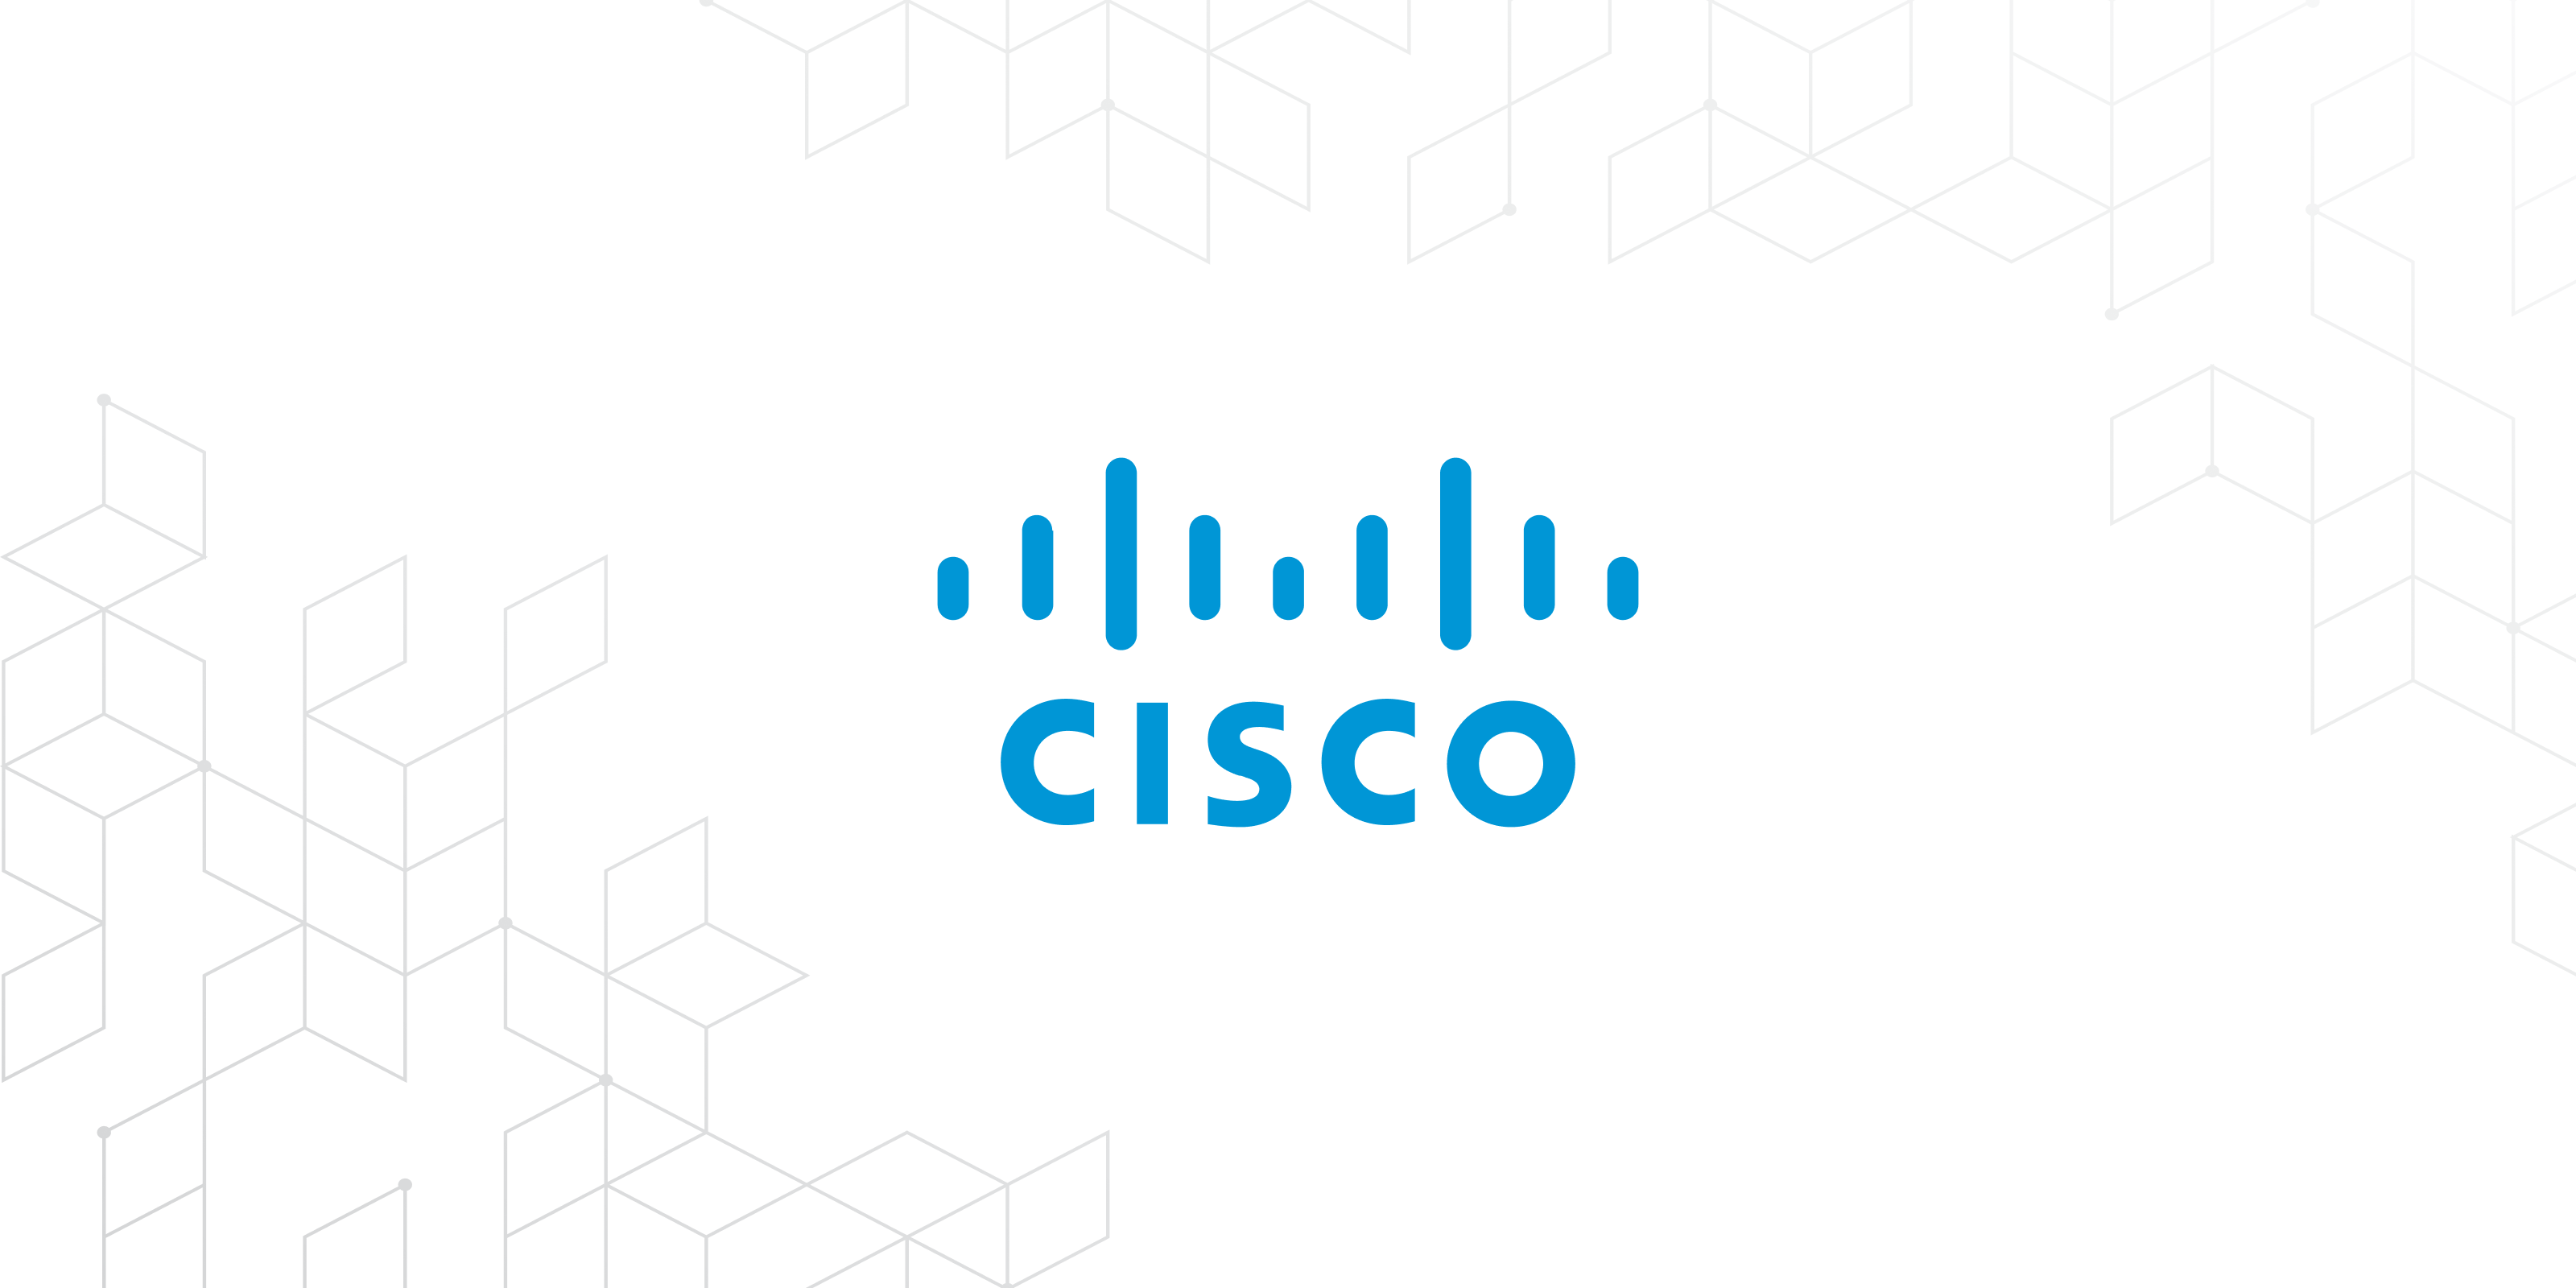 Cisco's logo